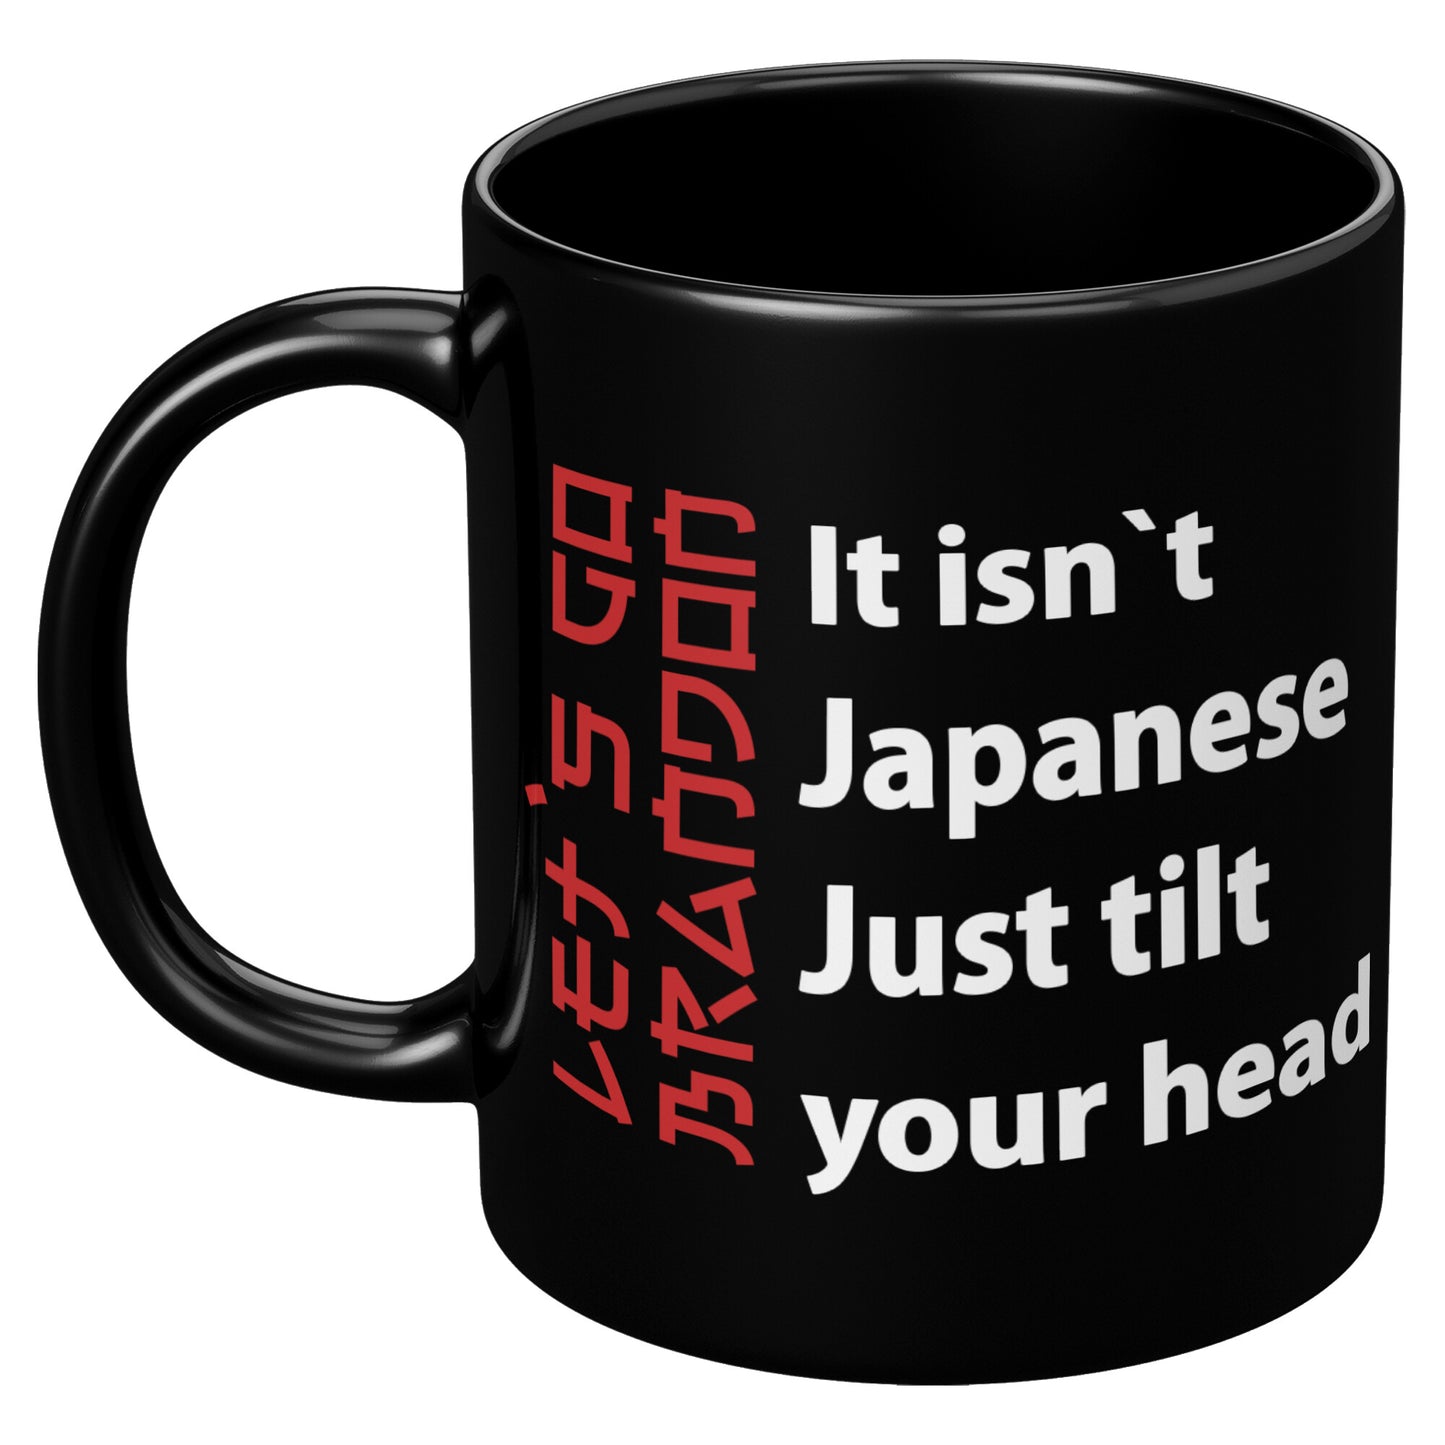 Let's Go Brandon Mug (Japanese)